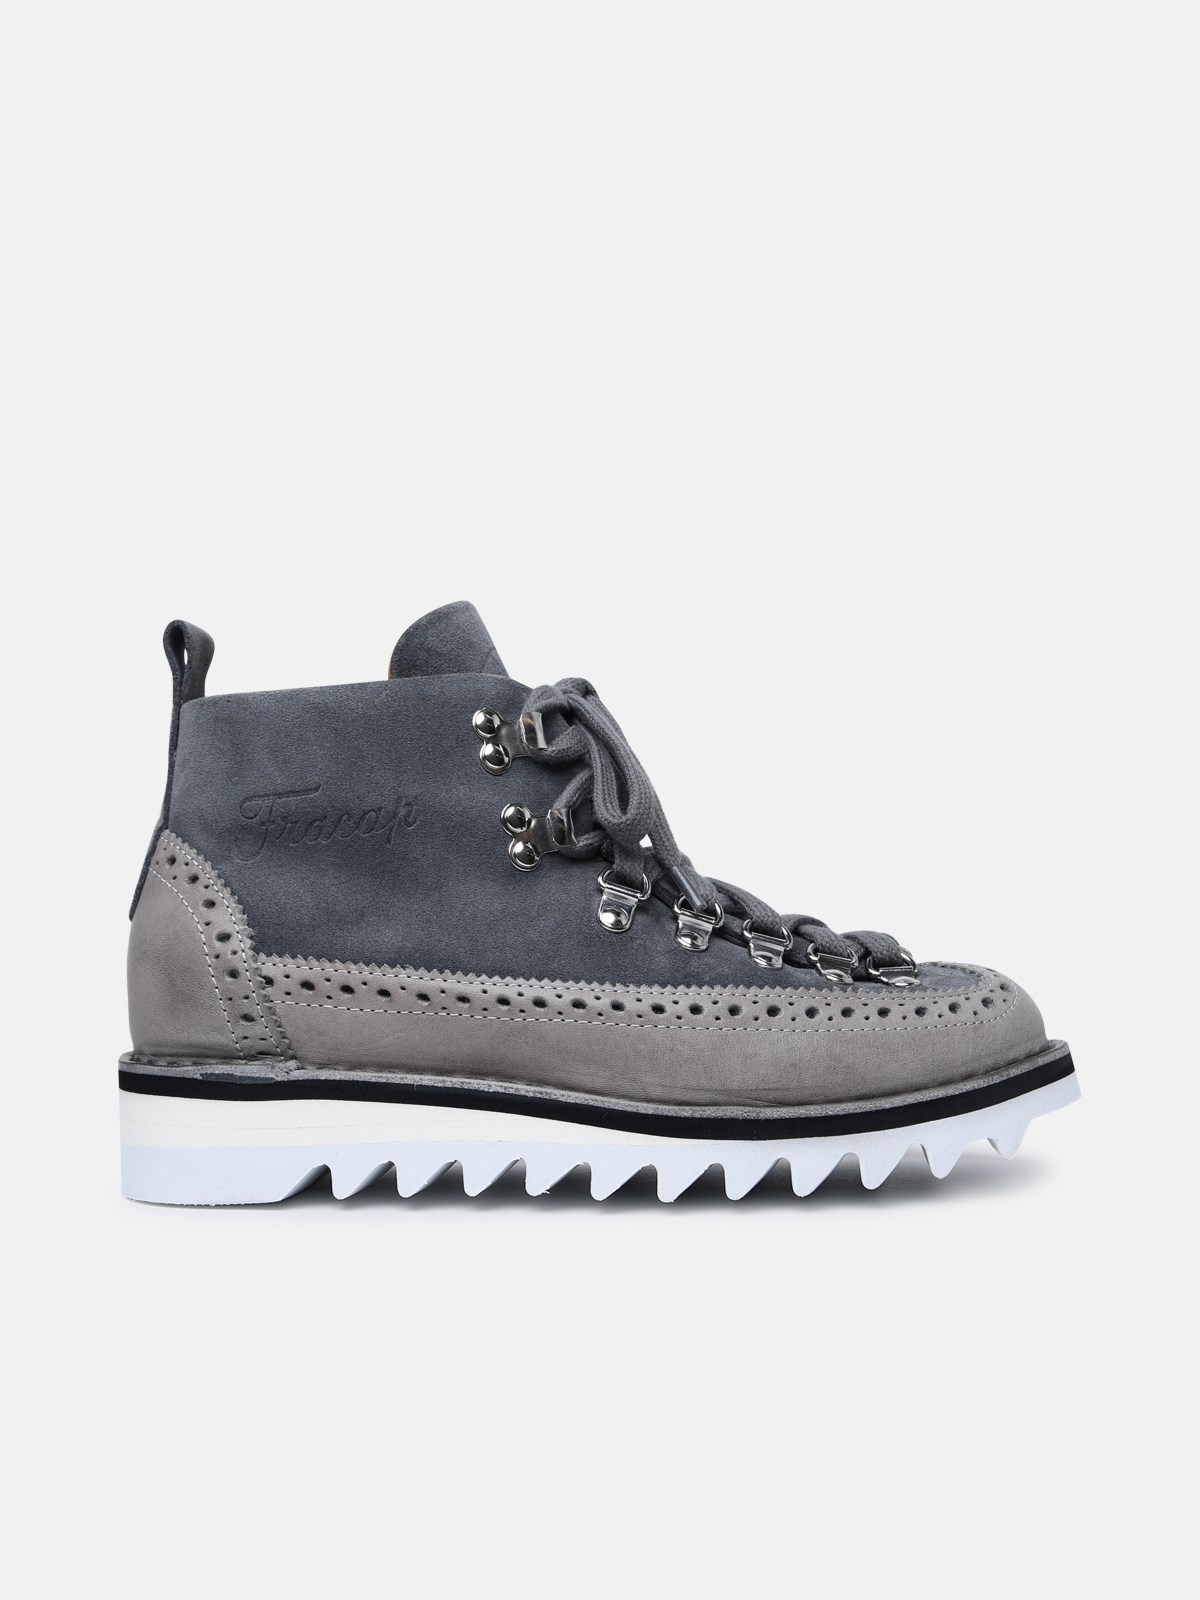 Fracap 'm130' Grey Leather Boots